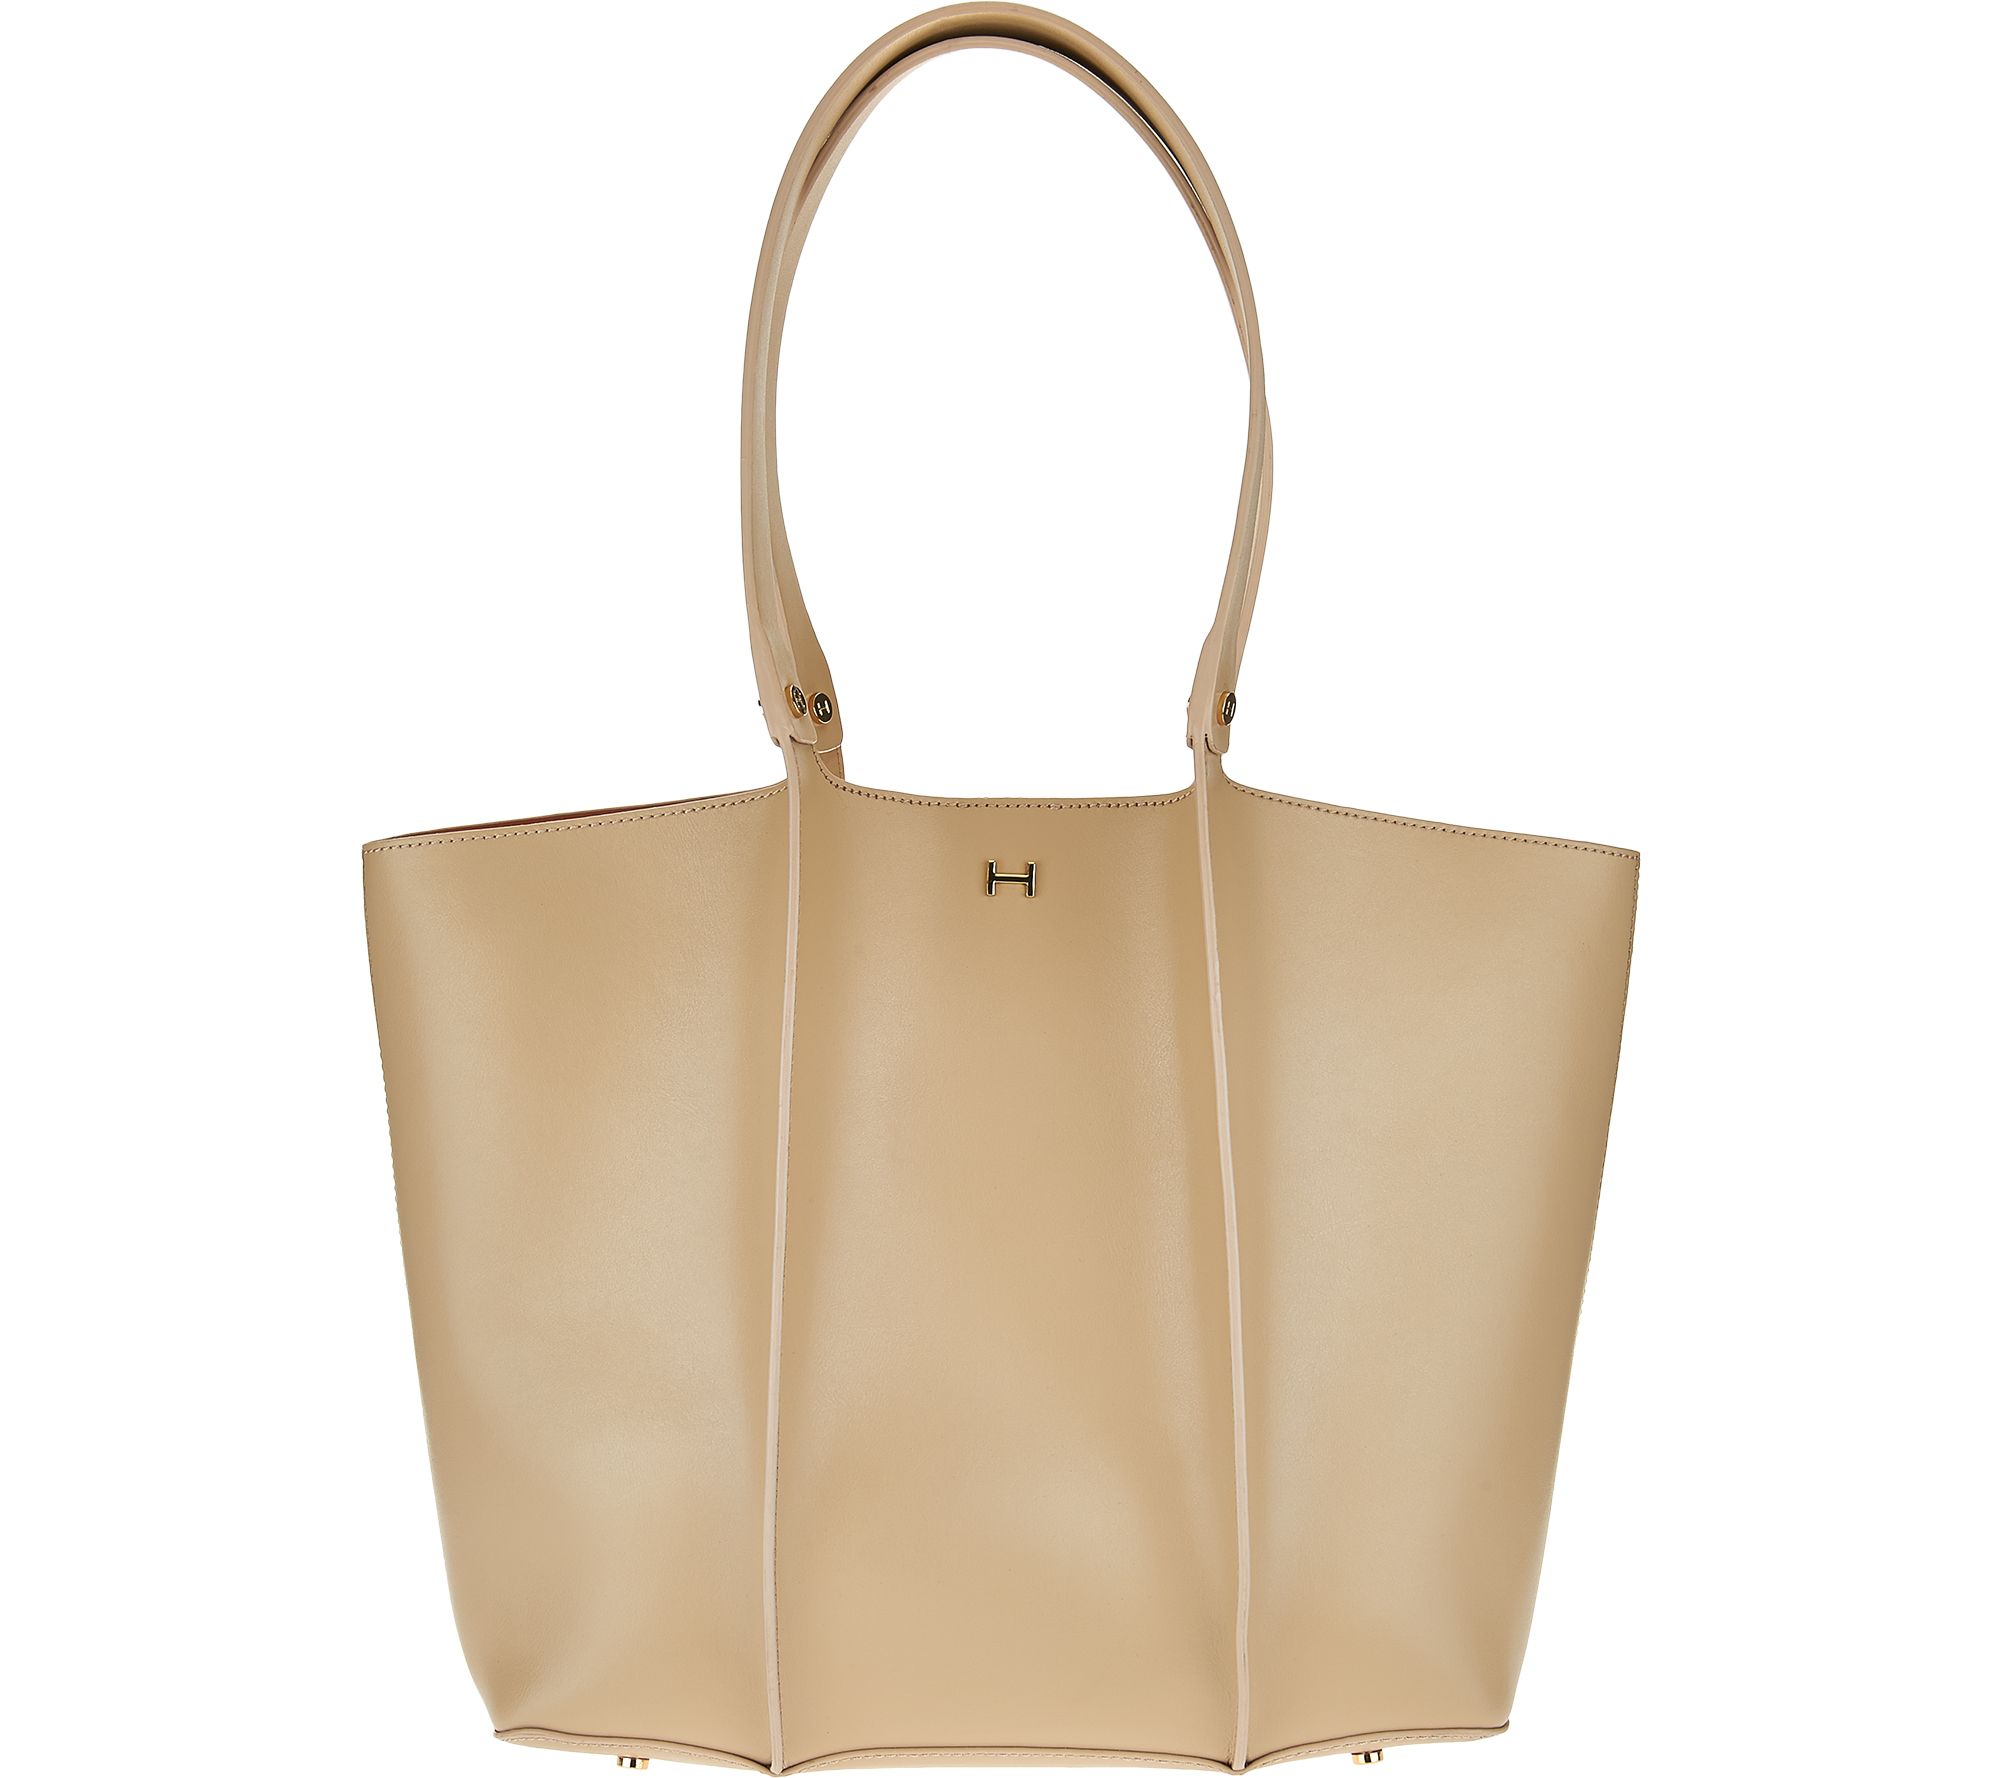 Tote Bags — Handbags — Handbags & Luggage — www.bagsaleusa.com